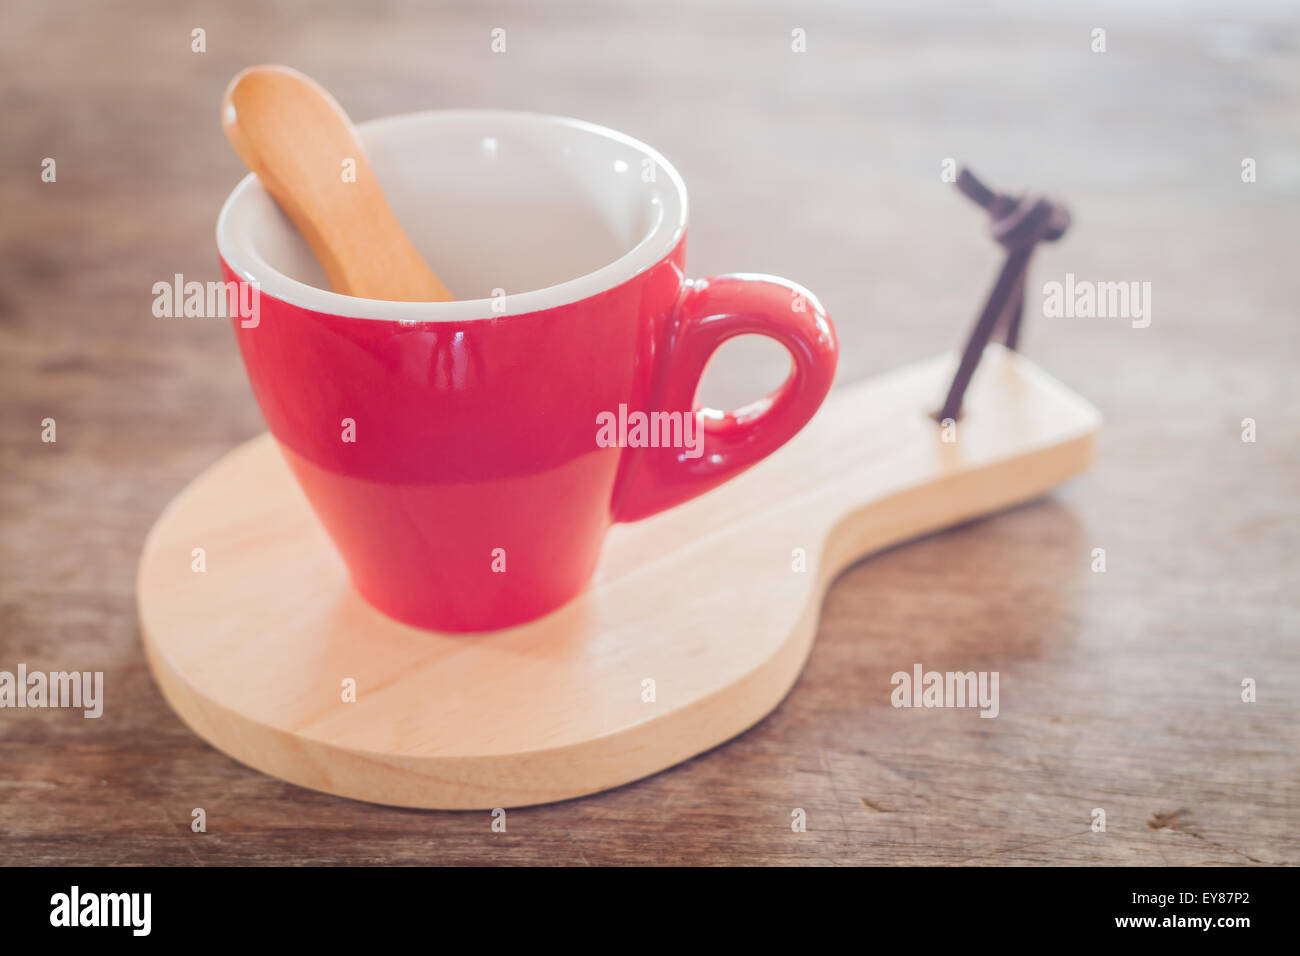 Rote Tasse mit Holzplatte, stock Foto Stockfoto